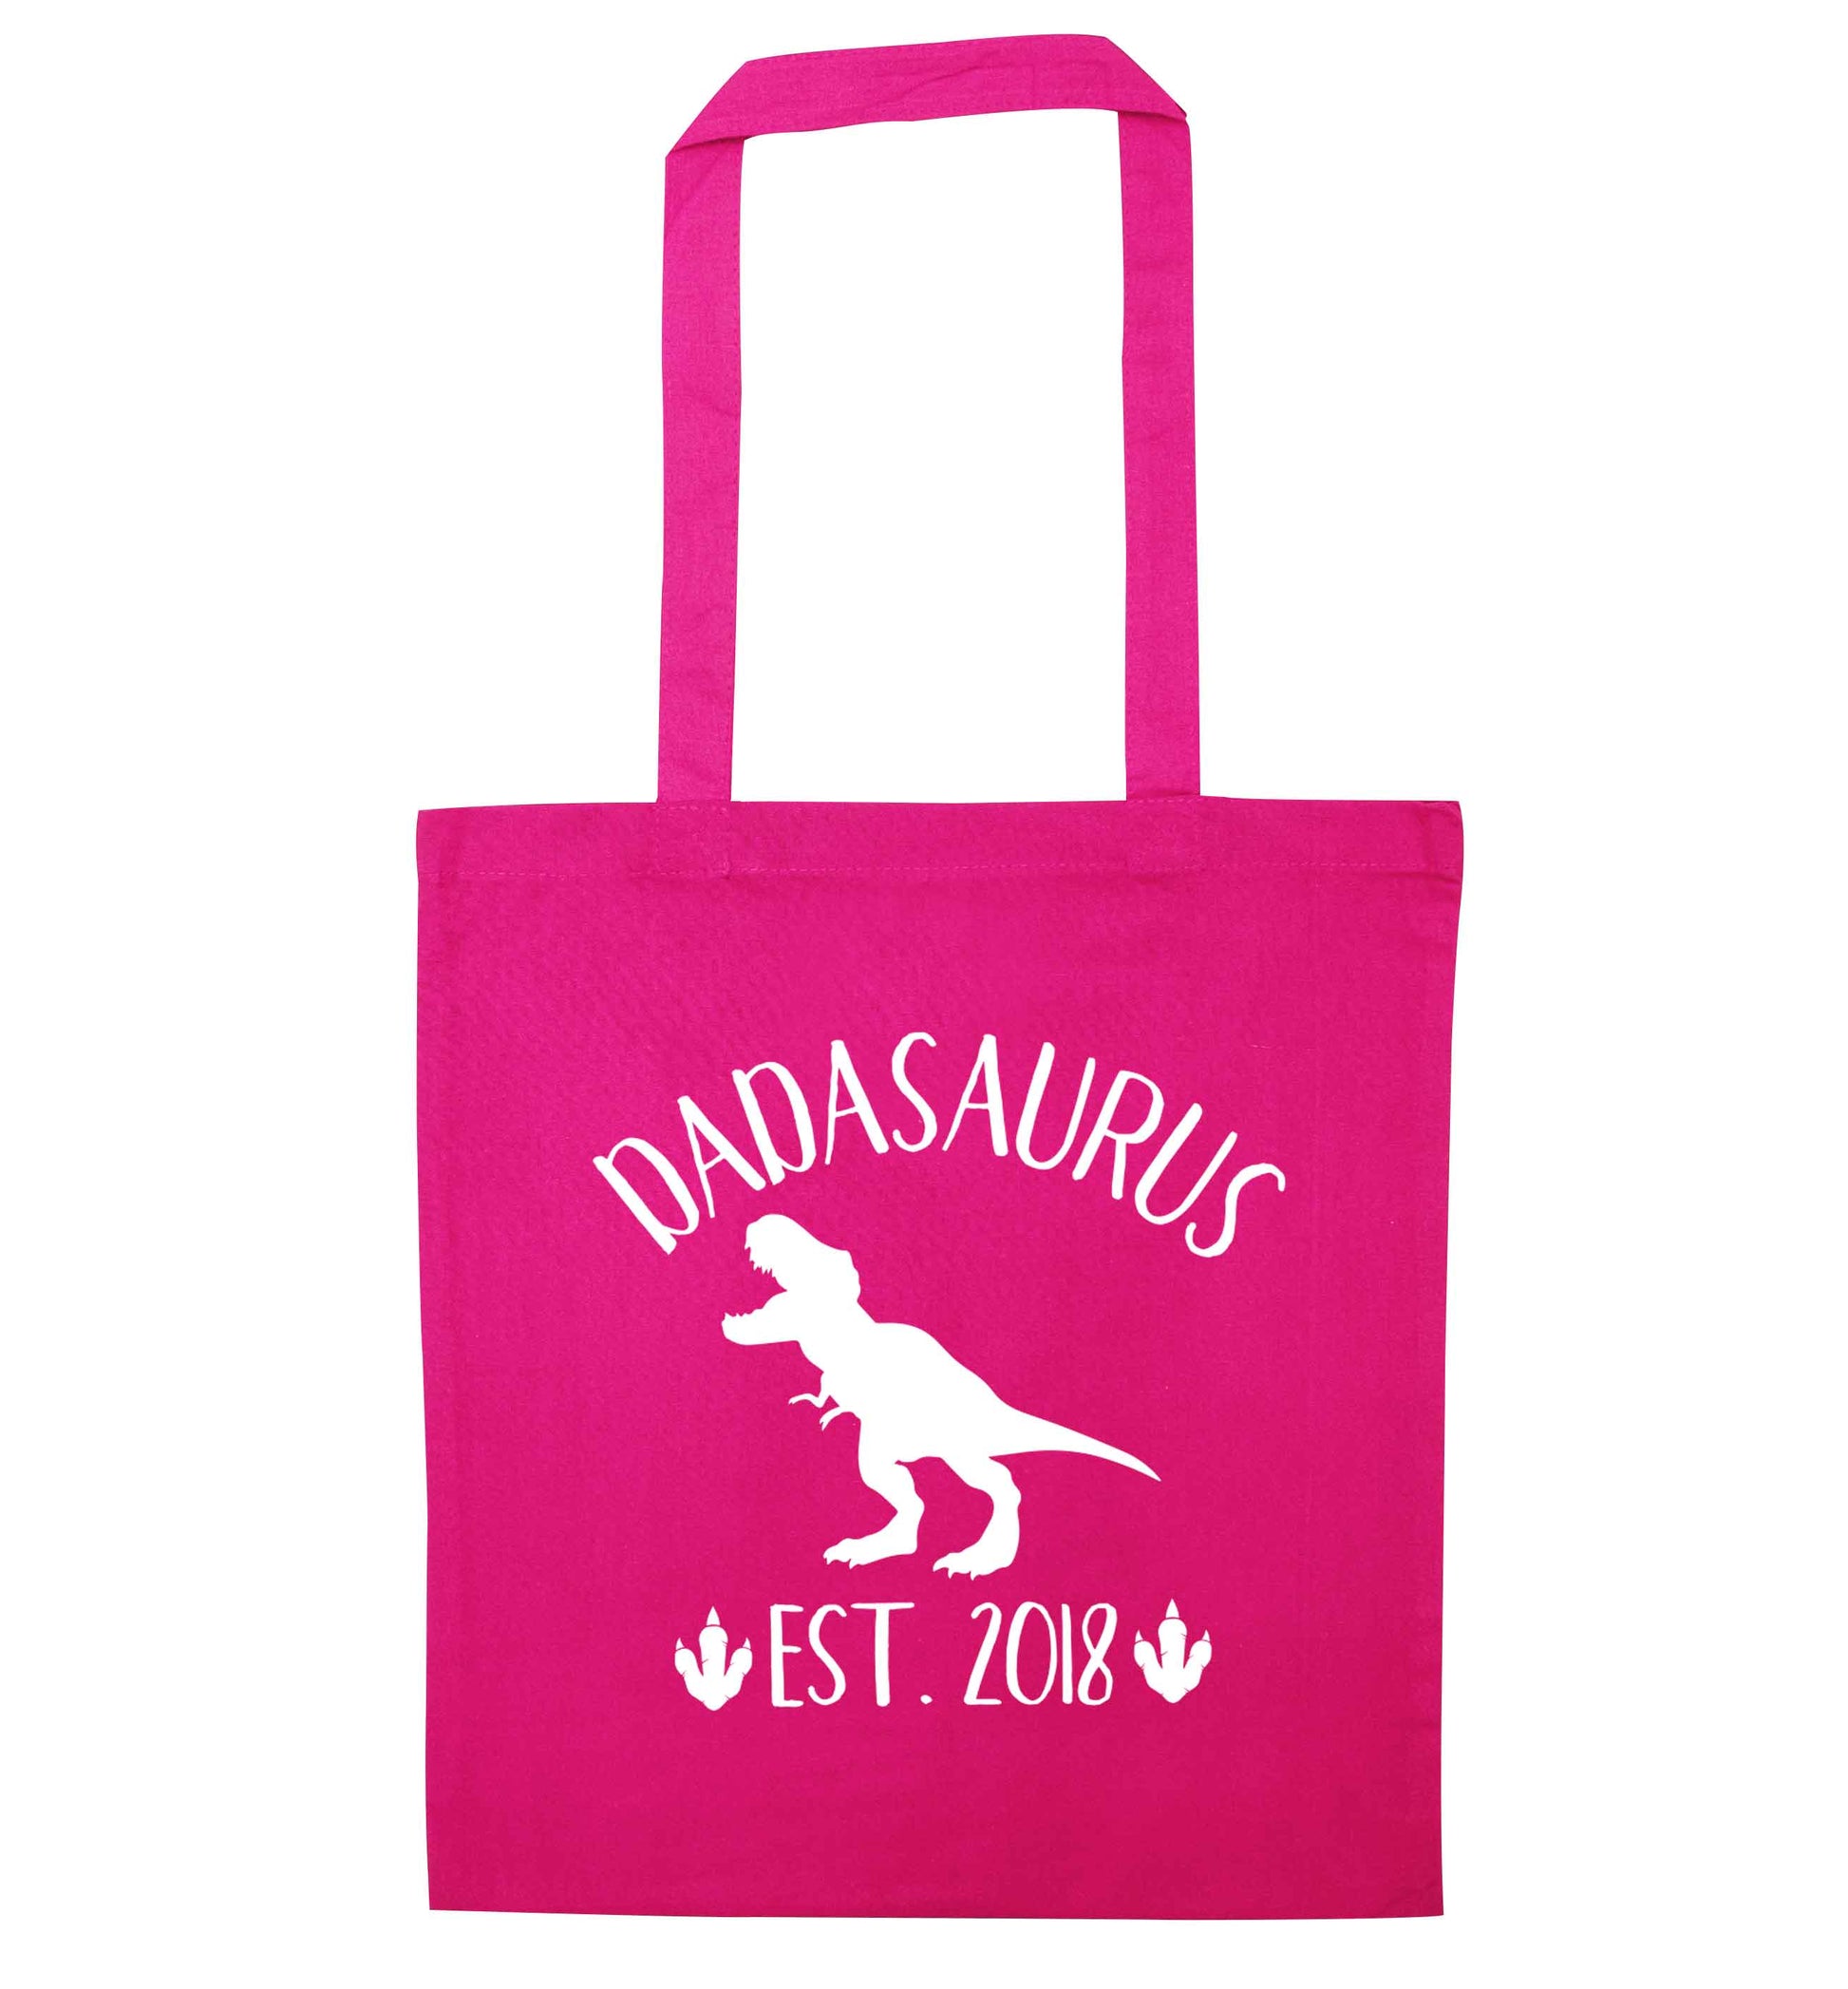 Personalised dadasaurus since (custom date) pink tote bag